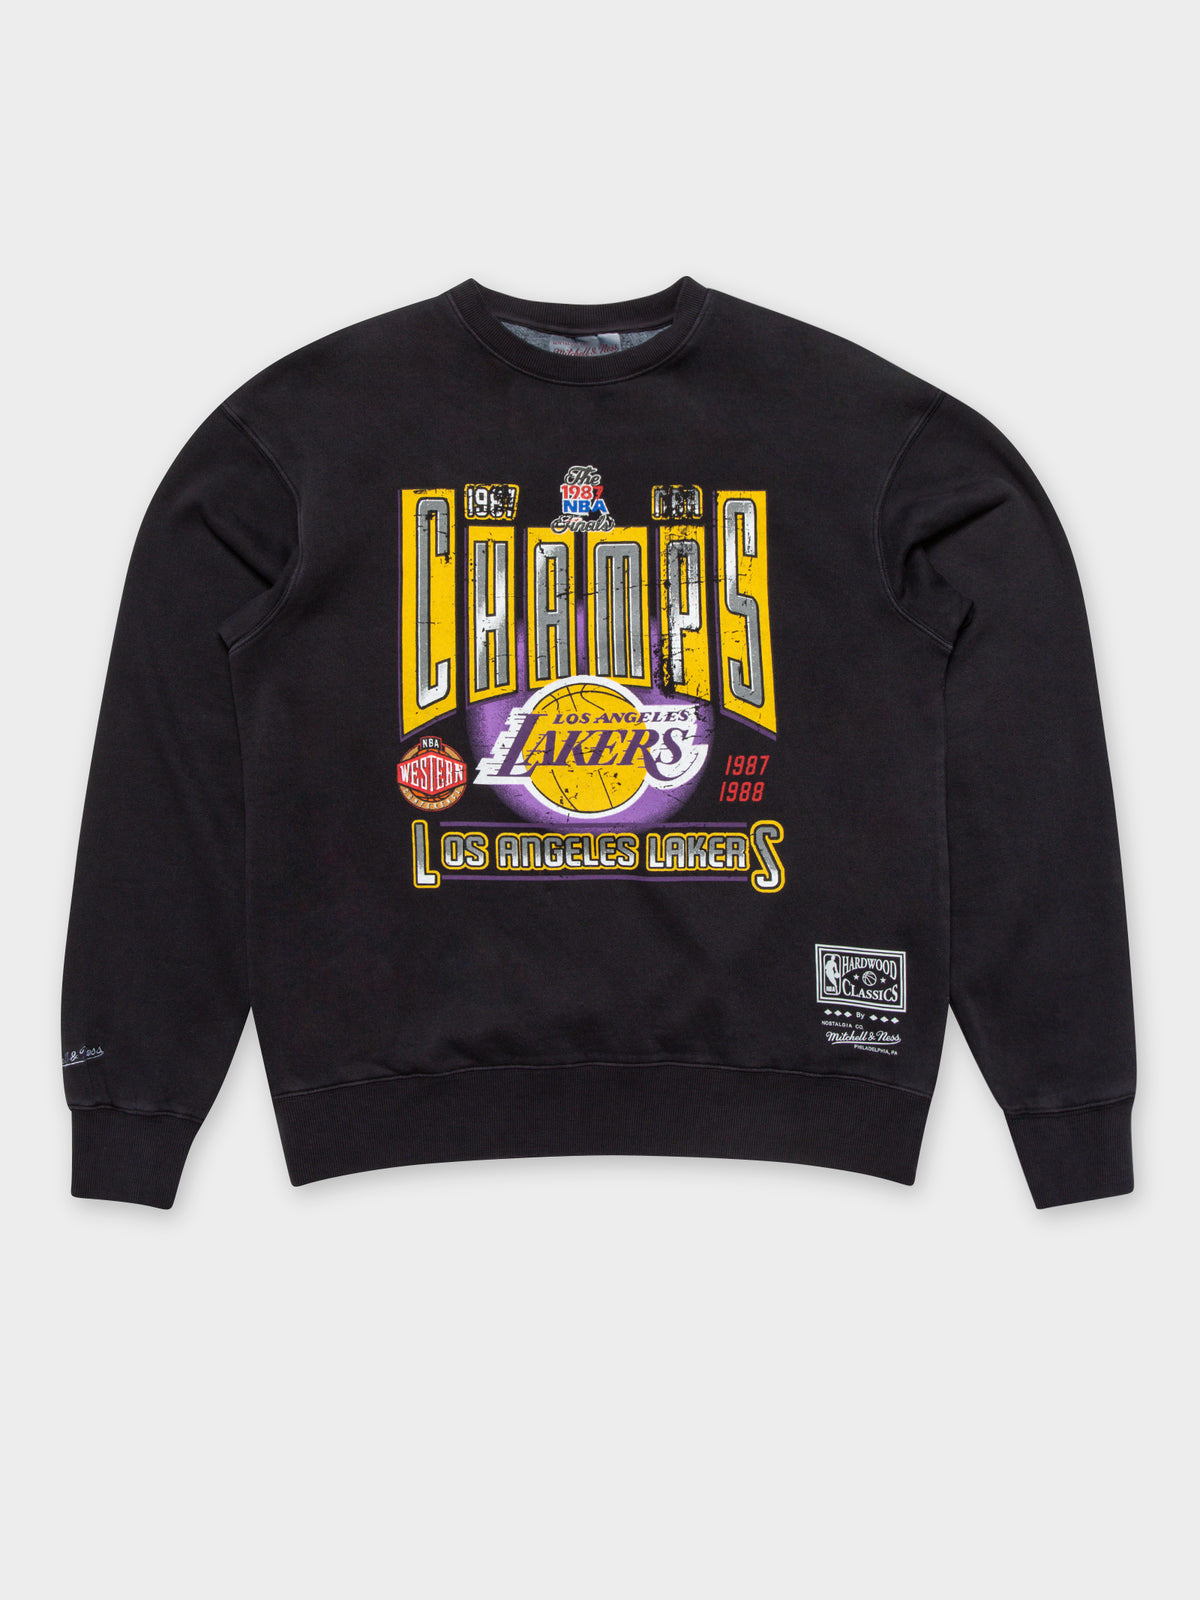 Vintage Champions Lakers Crewneck in Black